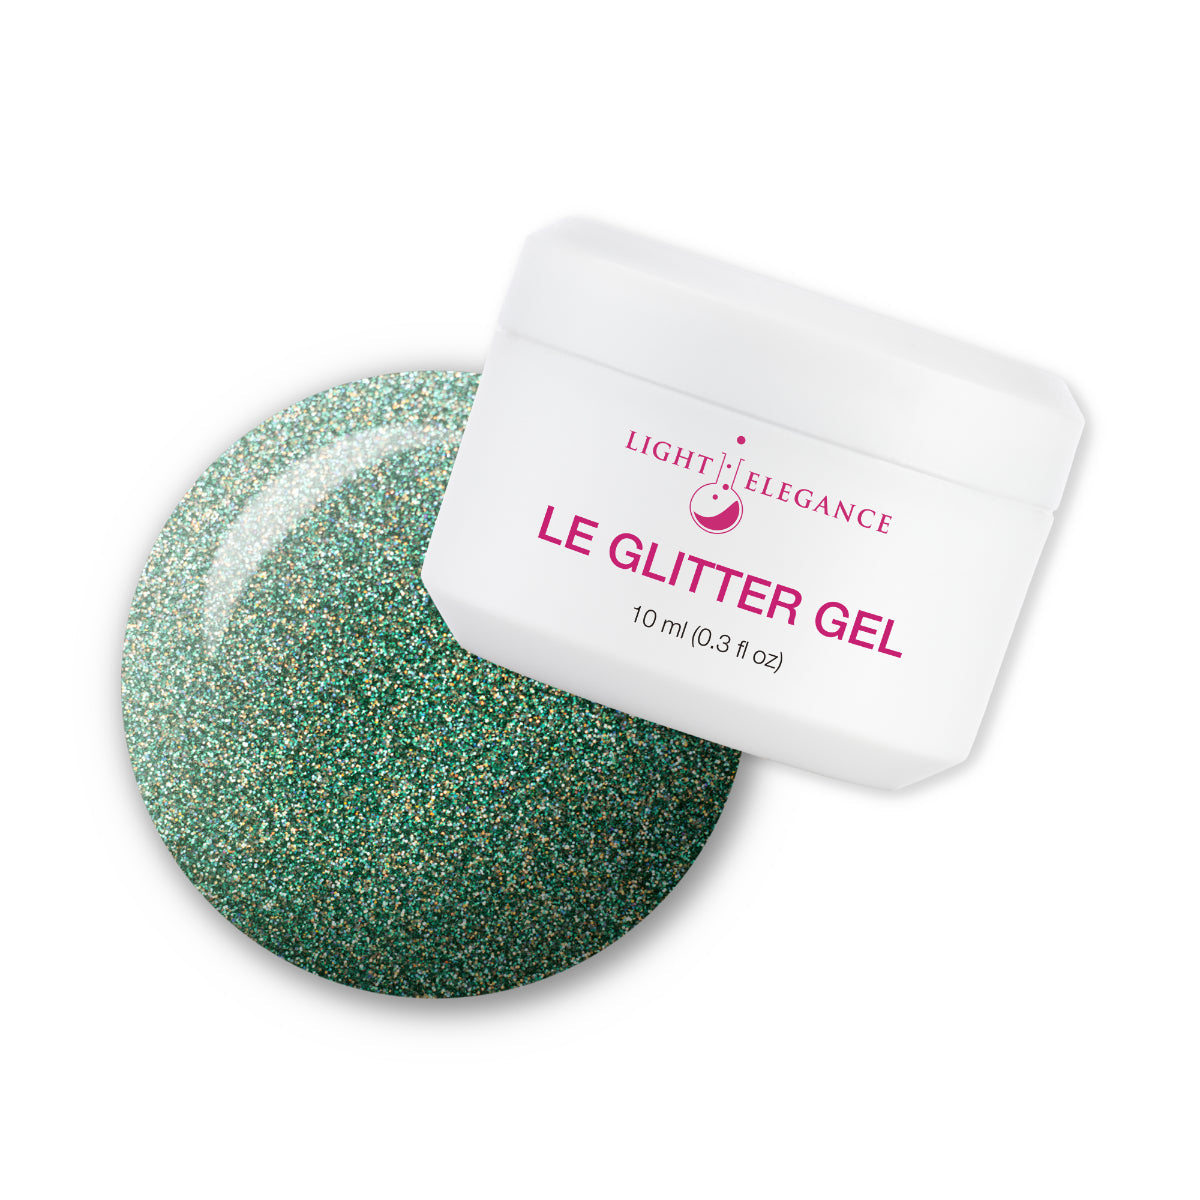 Light Elegance Glitter Gel - Bravo! :: New Packaging - Creata Beauty - Professional Beauty Products